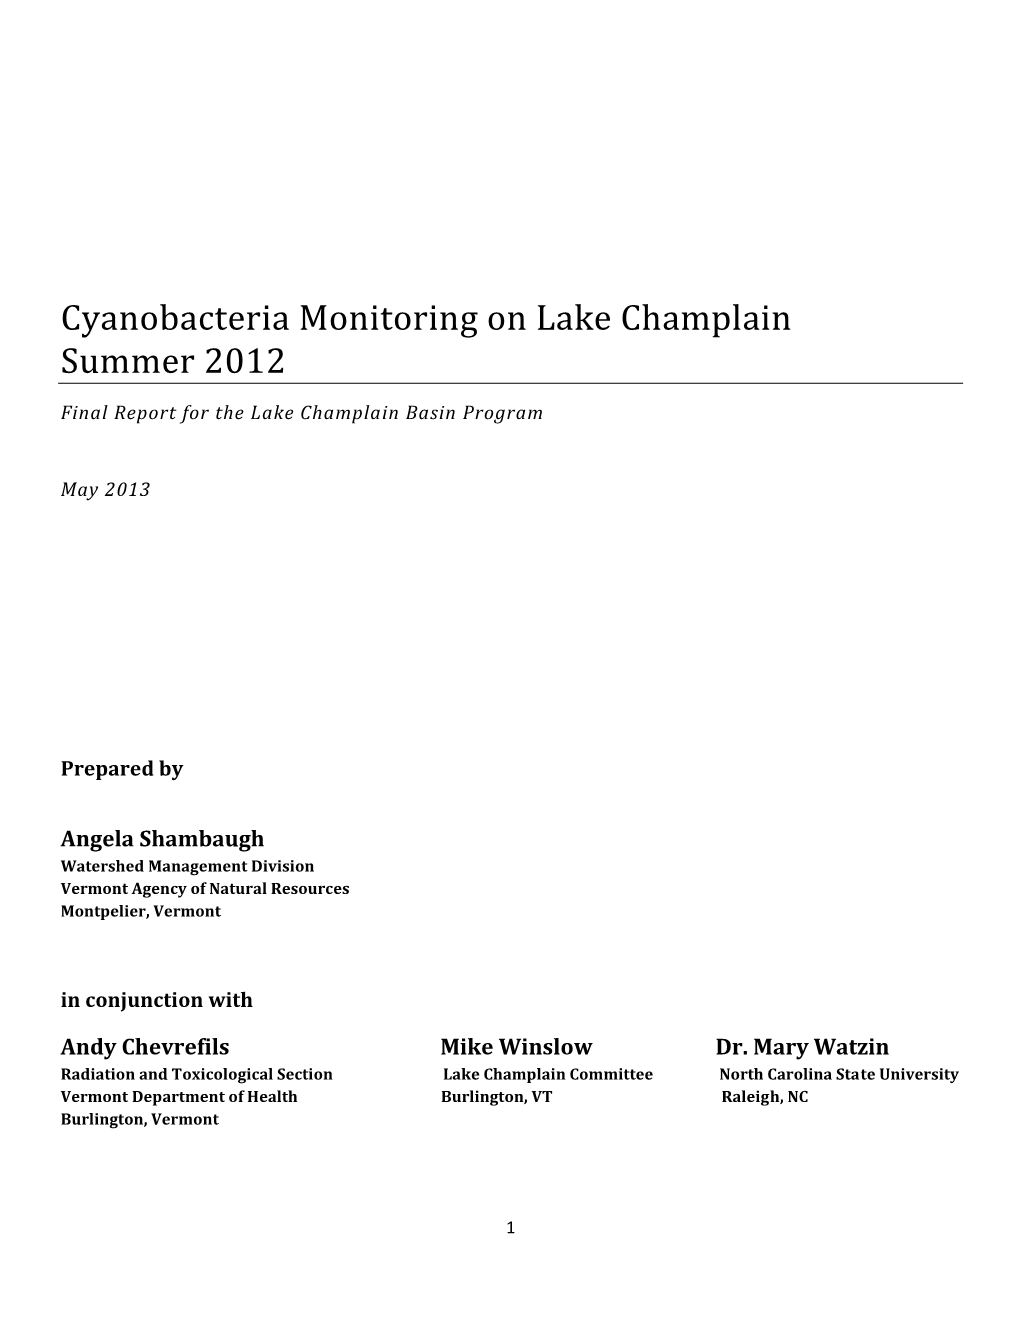 Cyanobacteria Monitoring on Lake Champlain Summer 2012